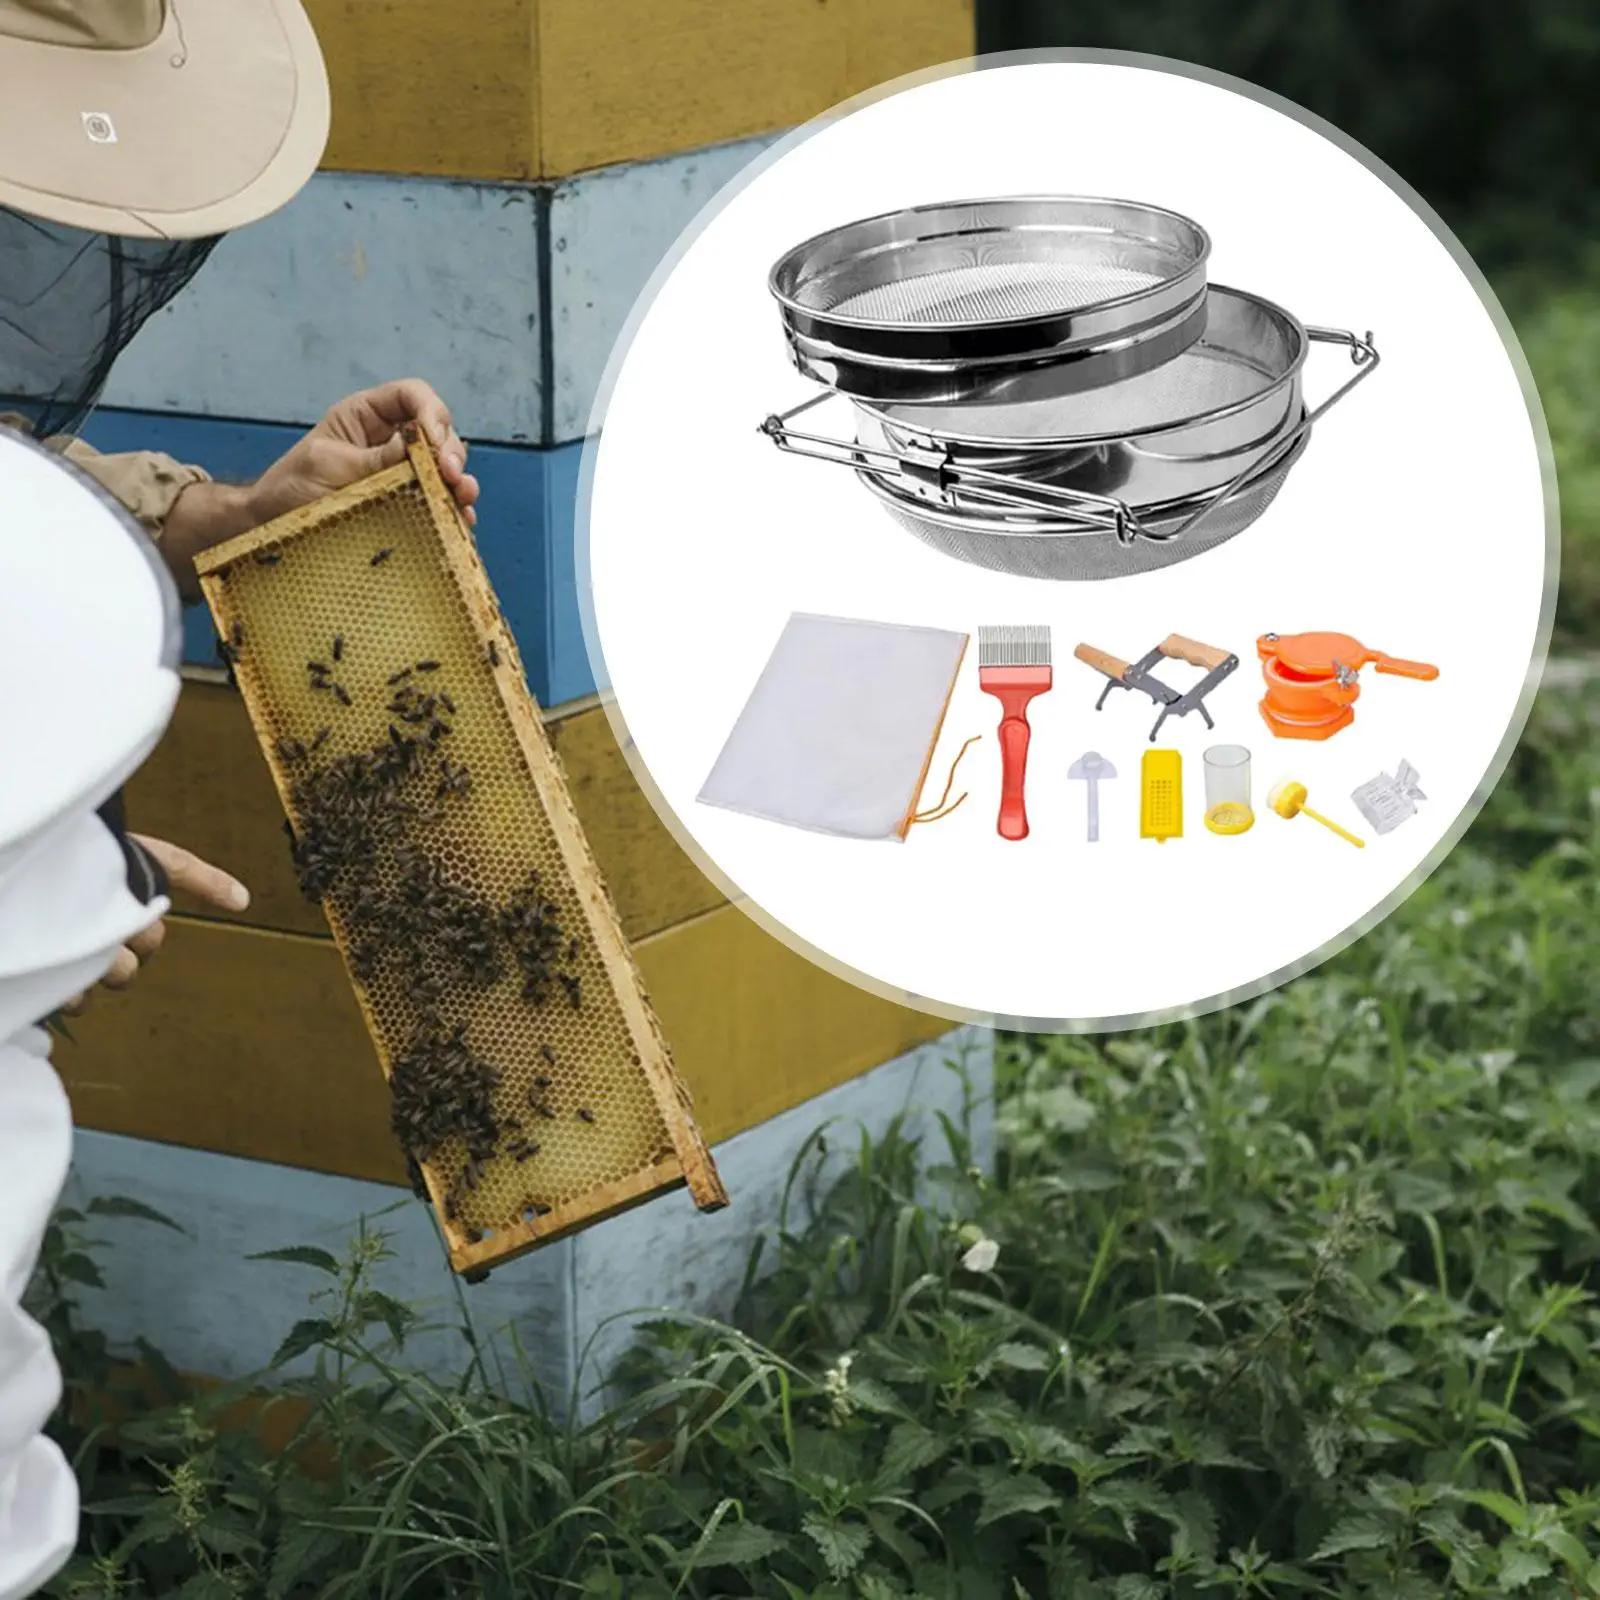 9x Beekeeping Set Stainless Steel Filter Net Beekeeping Equipment Supplies for Farm Beginners Professionals Beekeepers